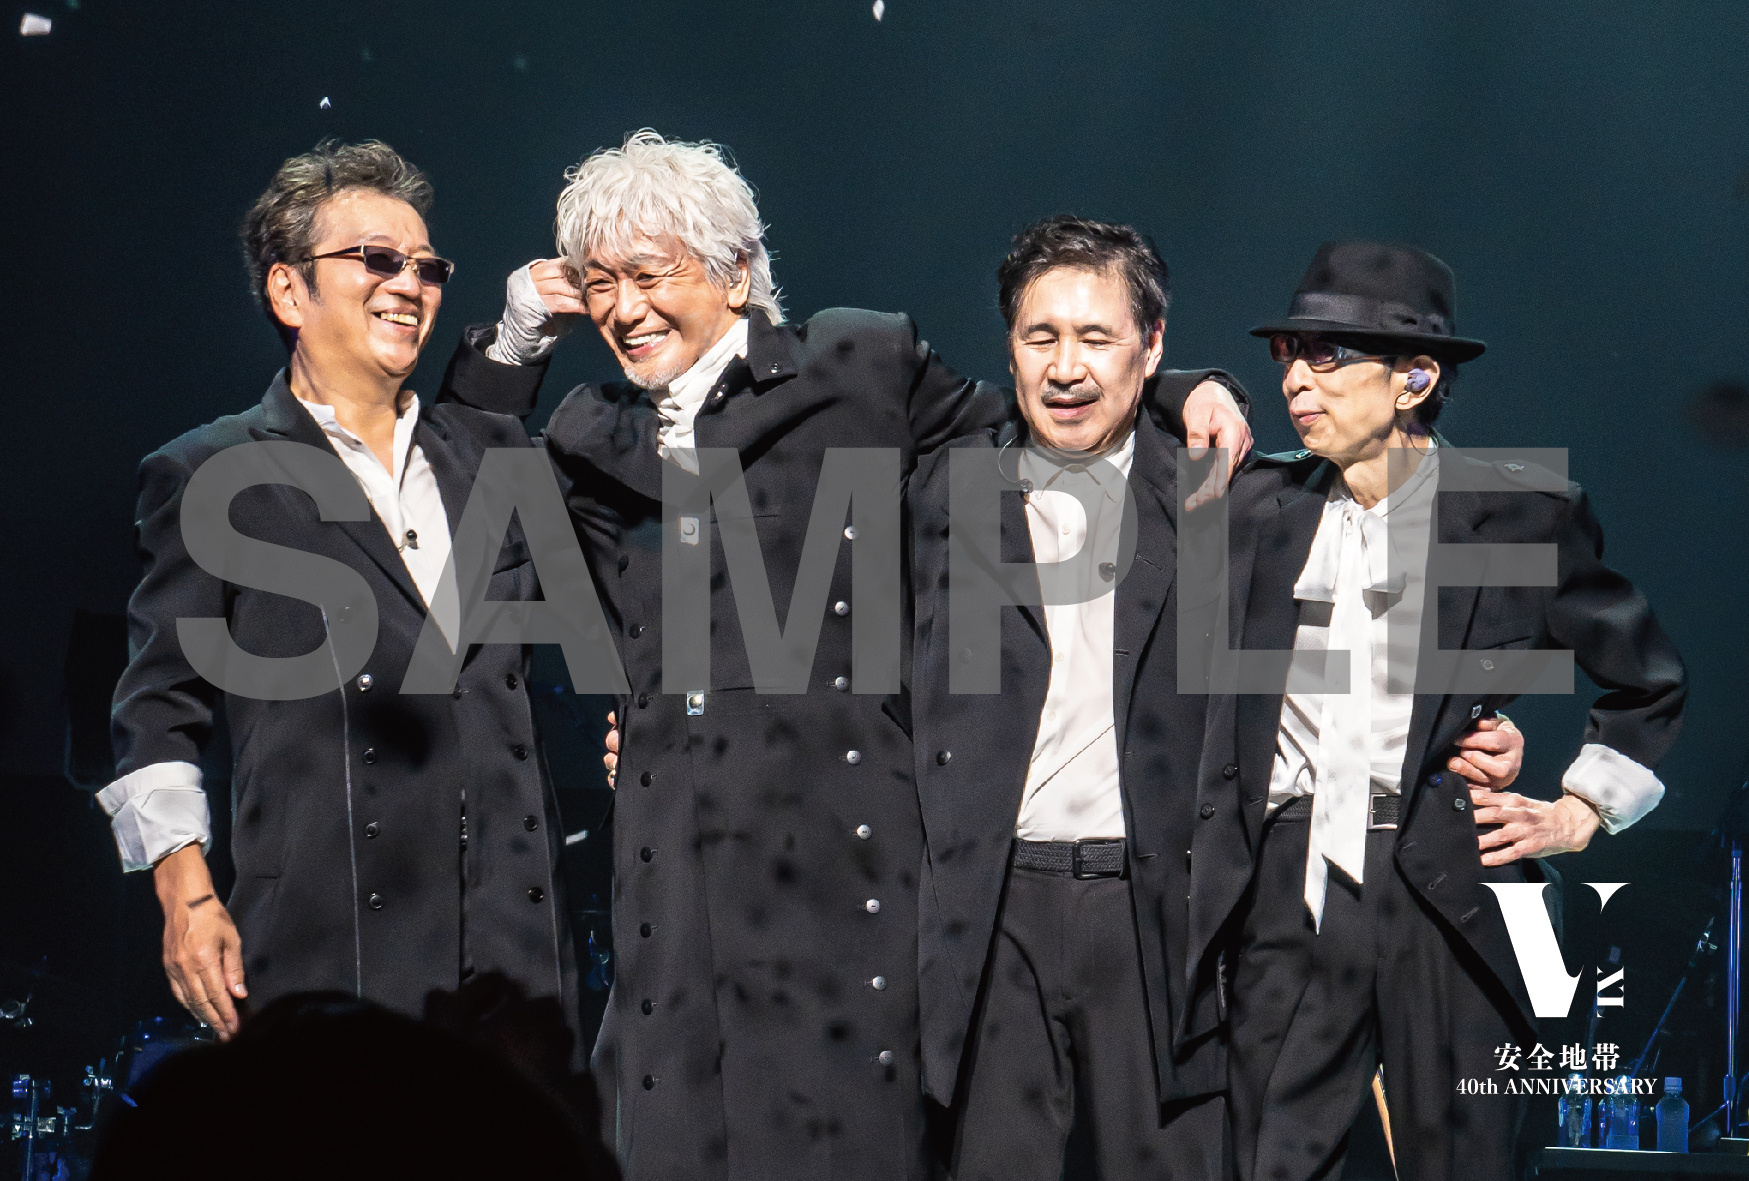 【CD】安全地帯40th ANNIVERSARY CONCERT "Just Keep Going!" Tokyo Garden Theater